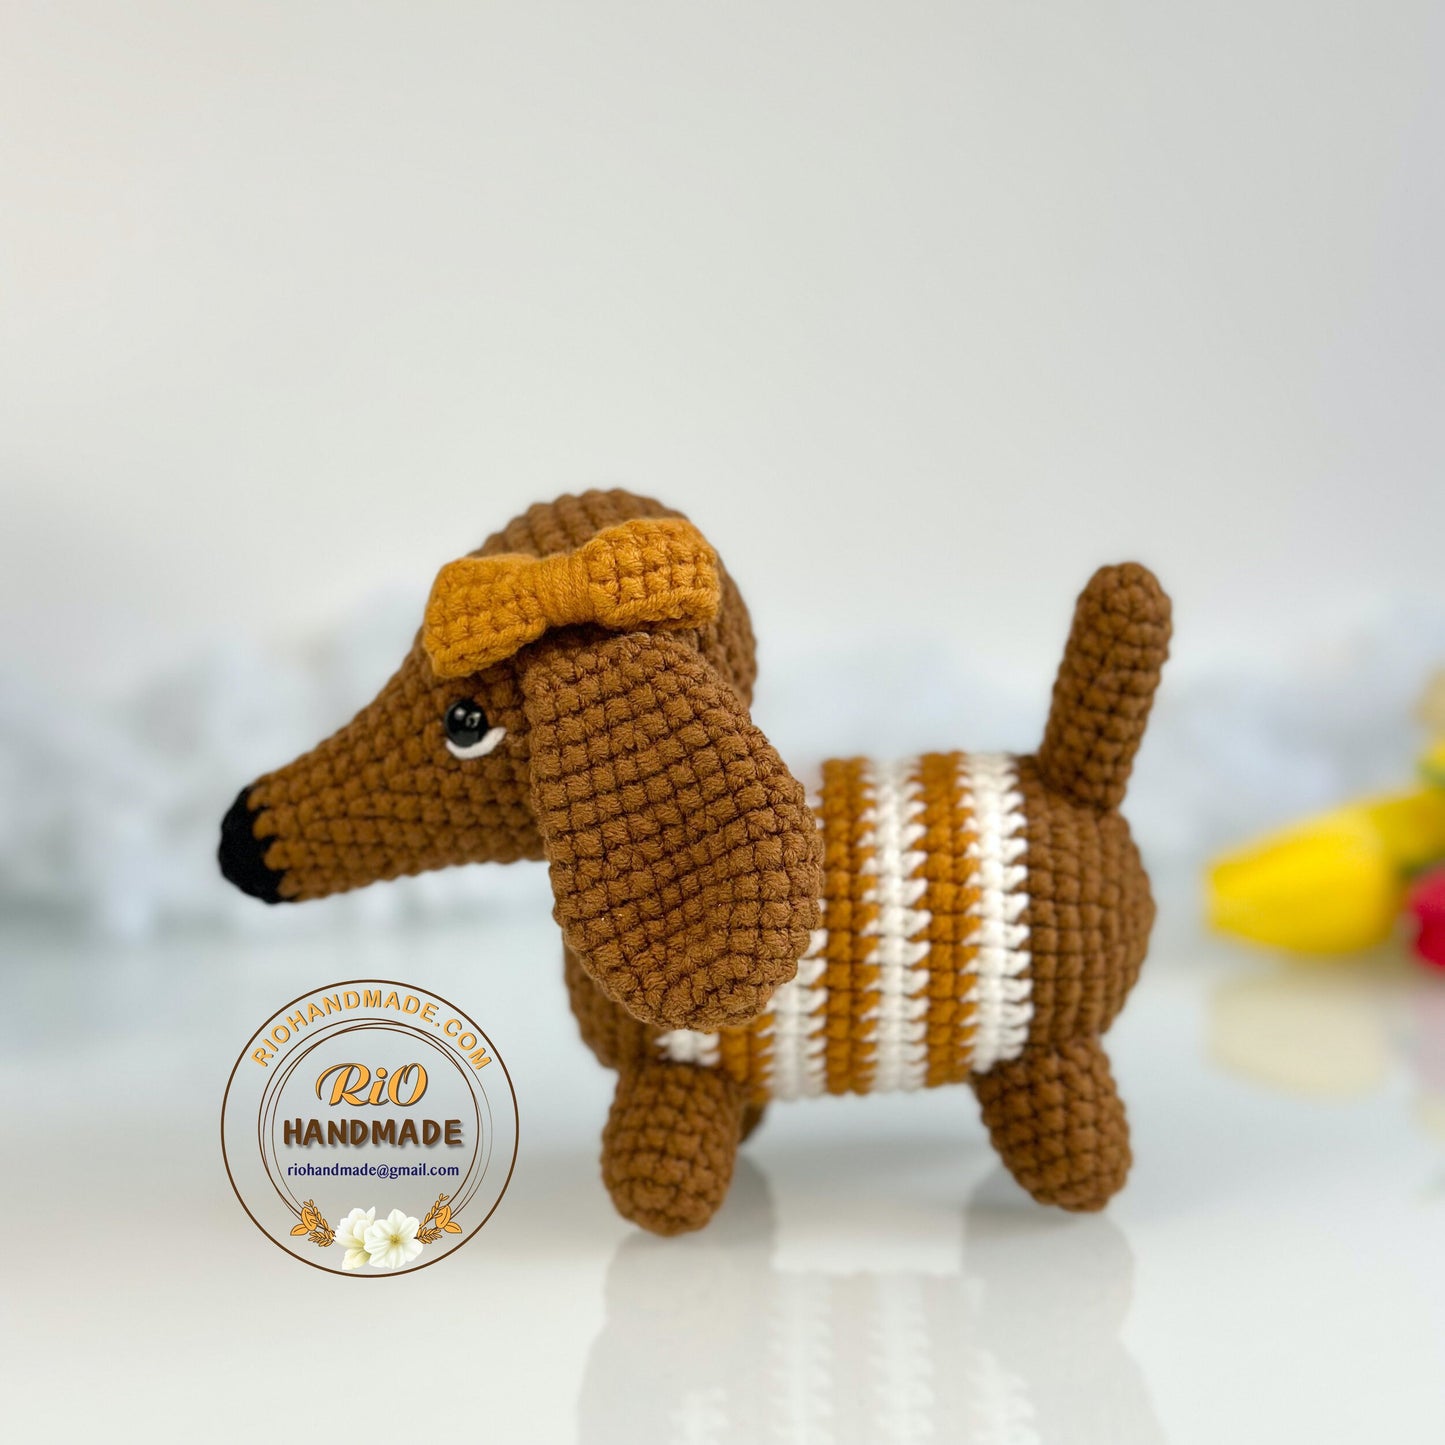 Handmade Dachshund Dog crochet, amigurumi Dachshund plush,home decor, toy for kid, perfect idea for gifts, present, craft doll